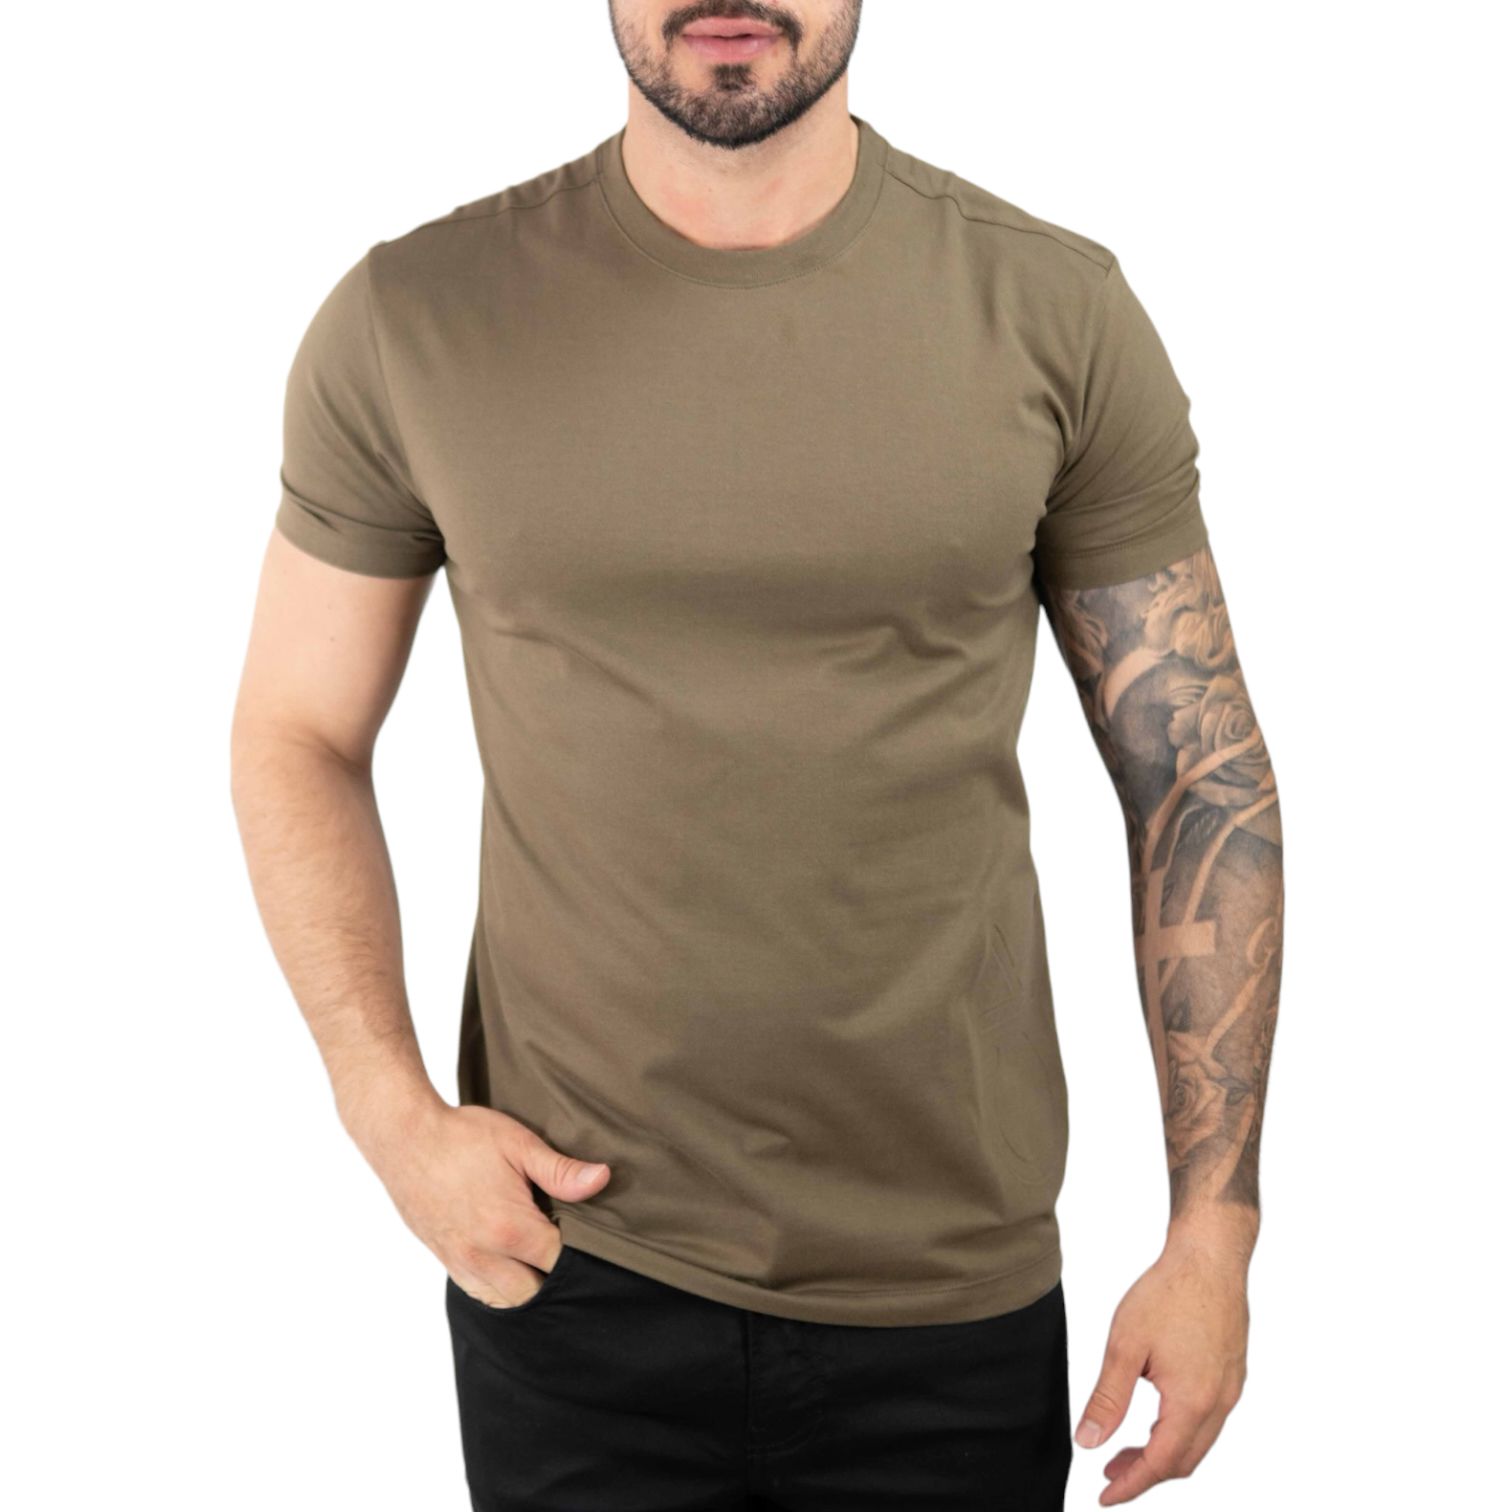 Camiseta masculina Calvin Klein listra verde militar - Preta - Camisetas -  Masculino